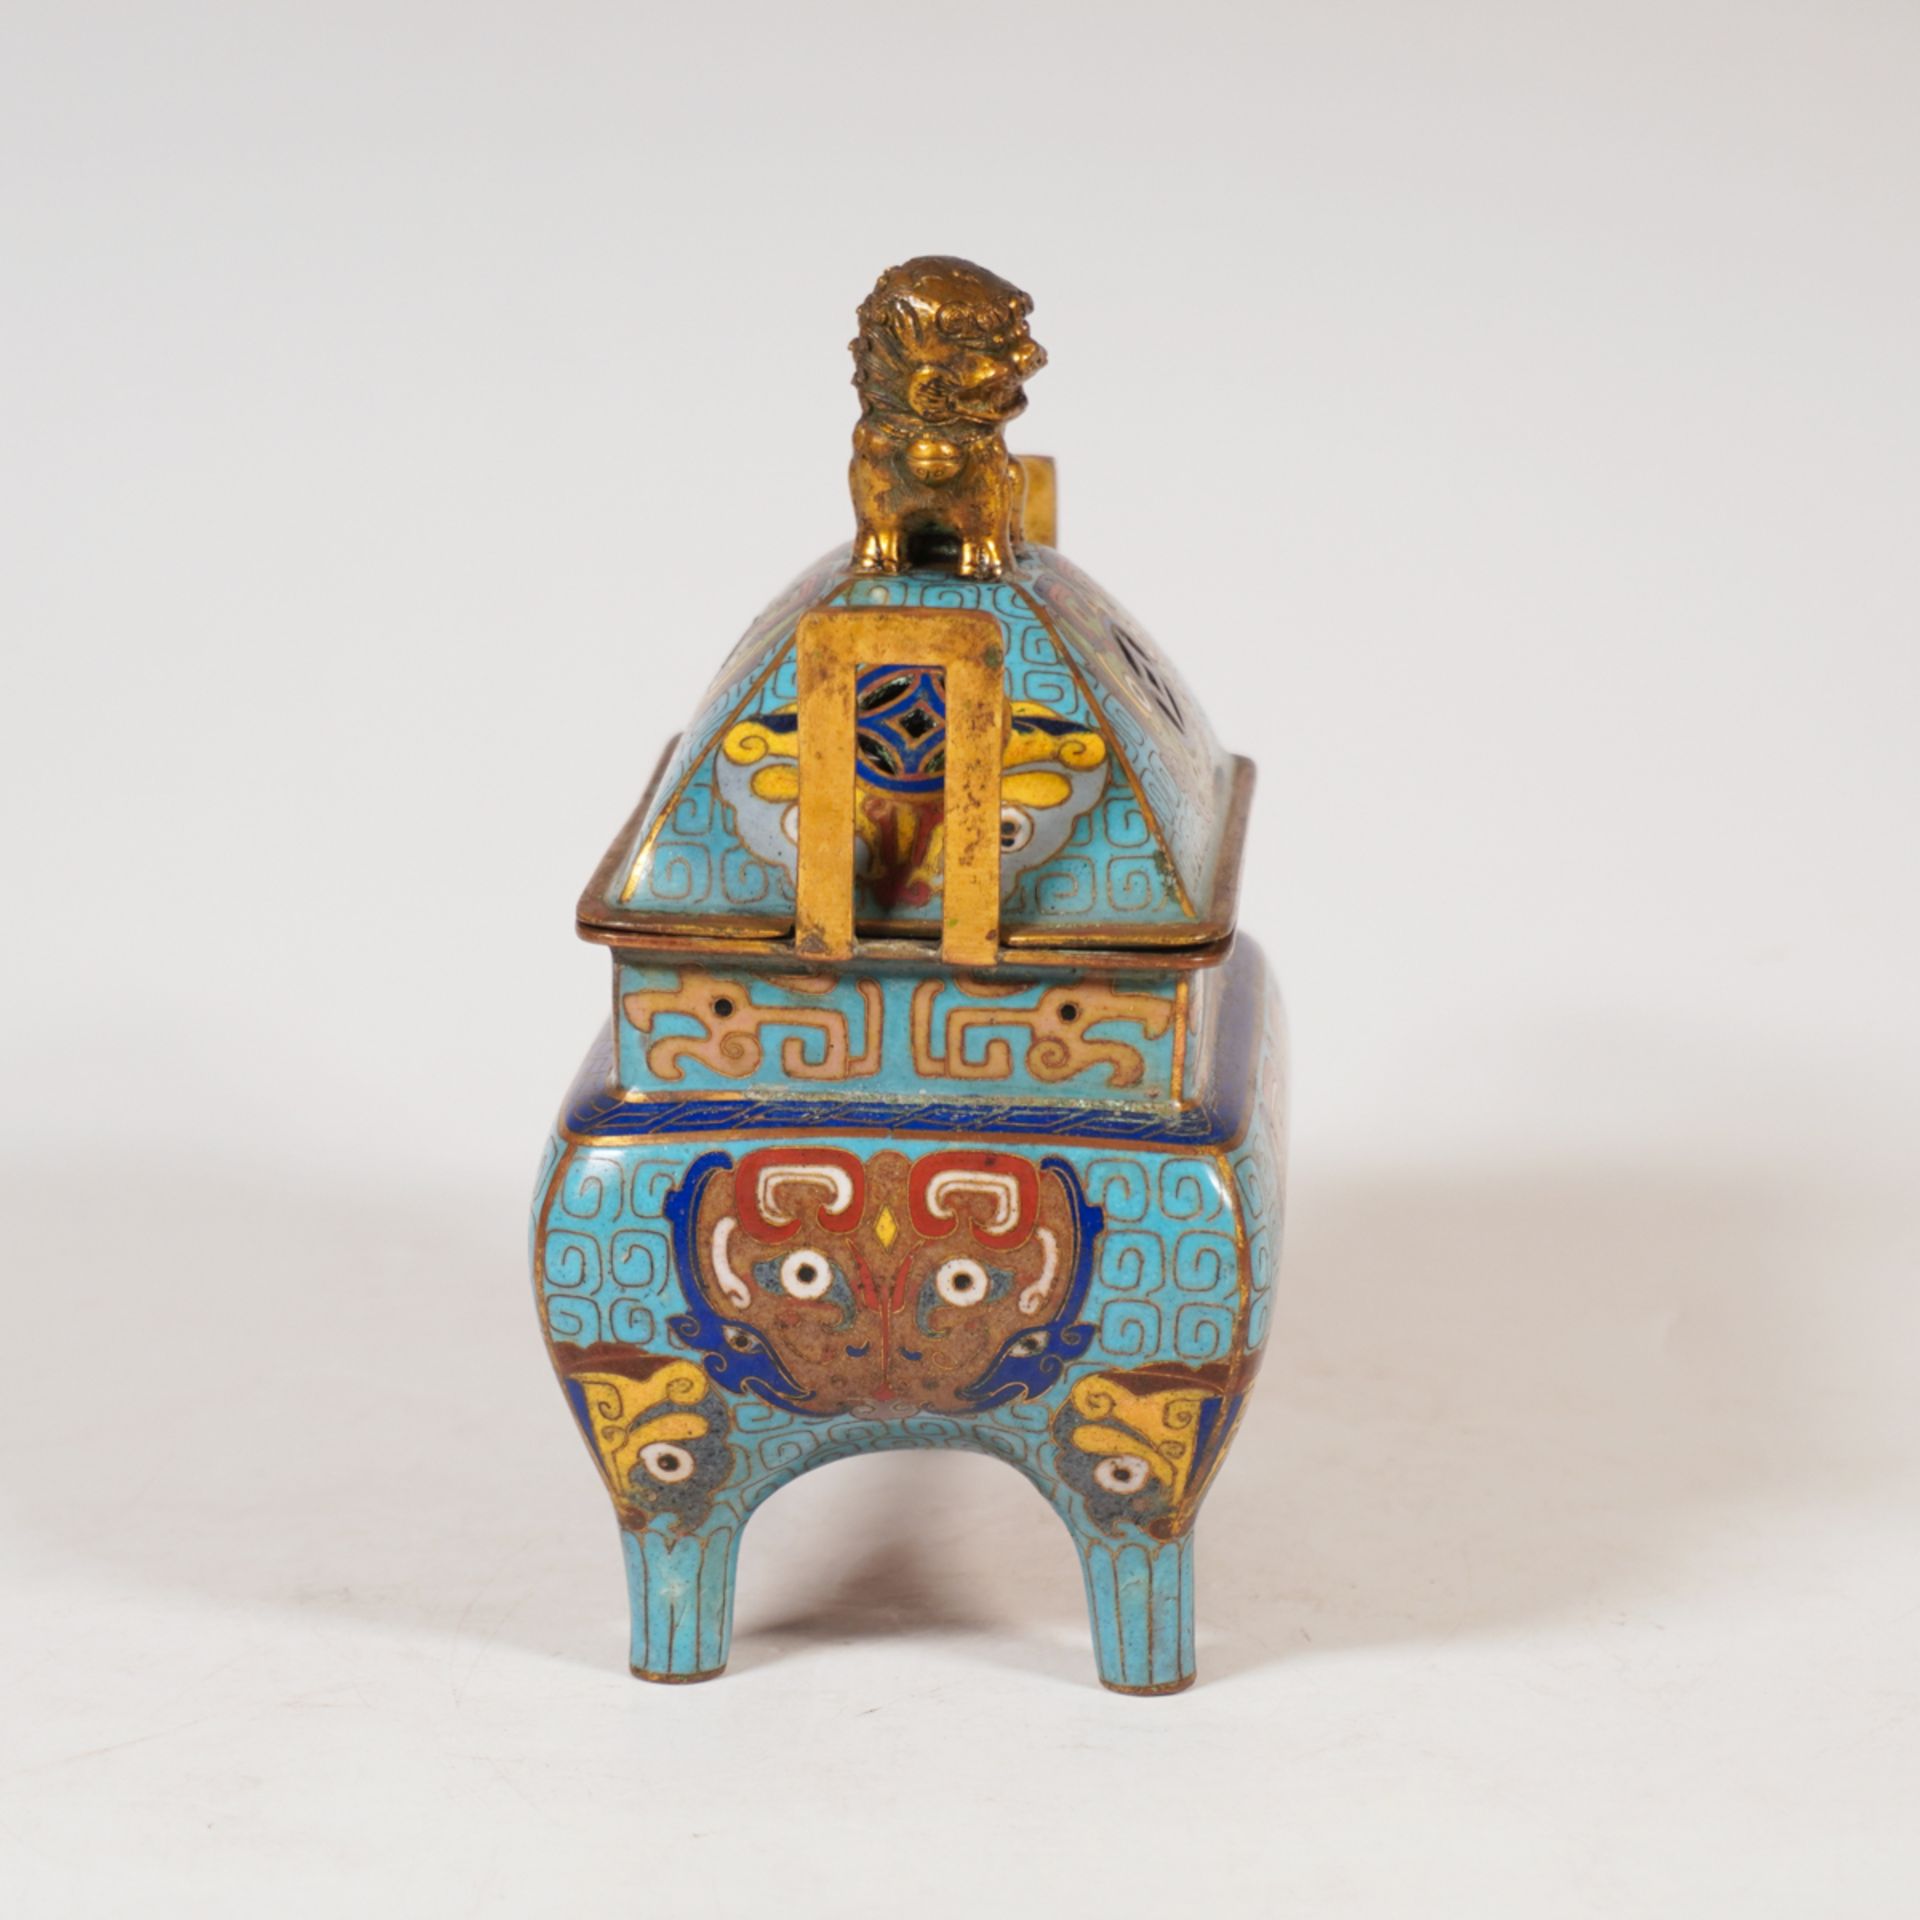 Miniatur Cloisonné - Räuchergefäß, wohl China, 20. Jh. - Bild 3 aus 4